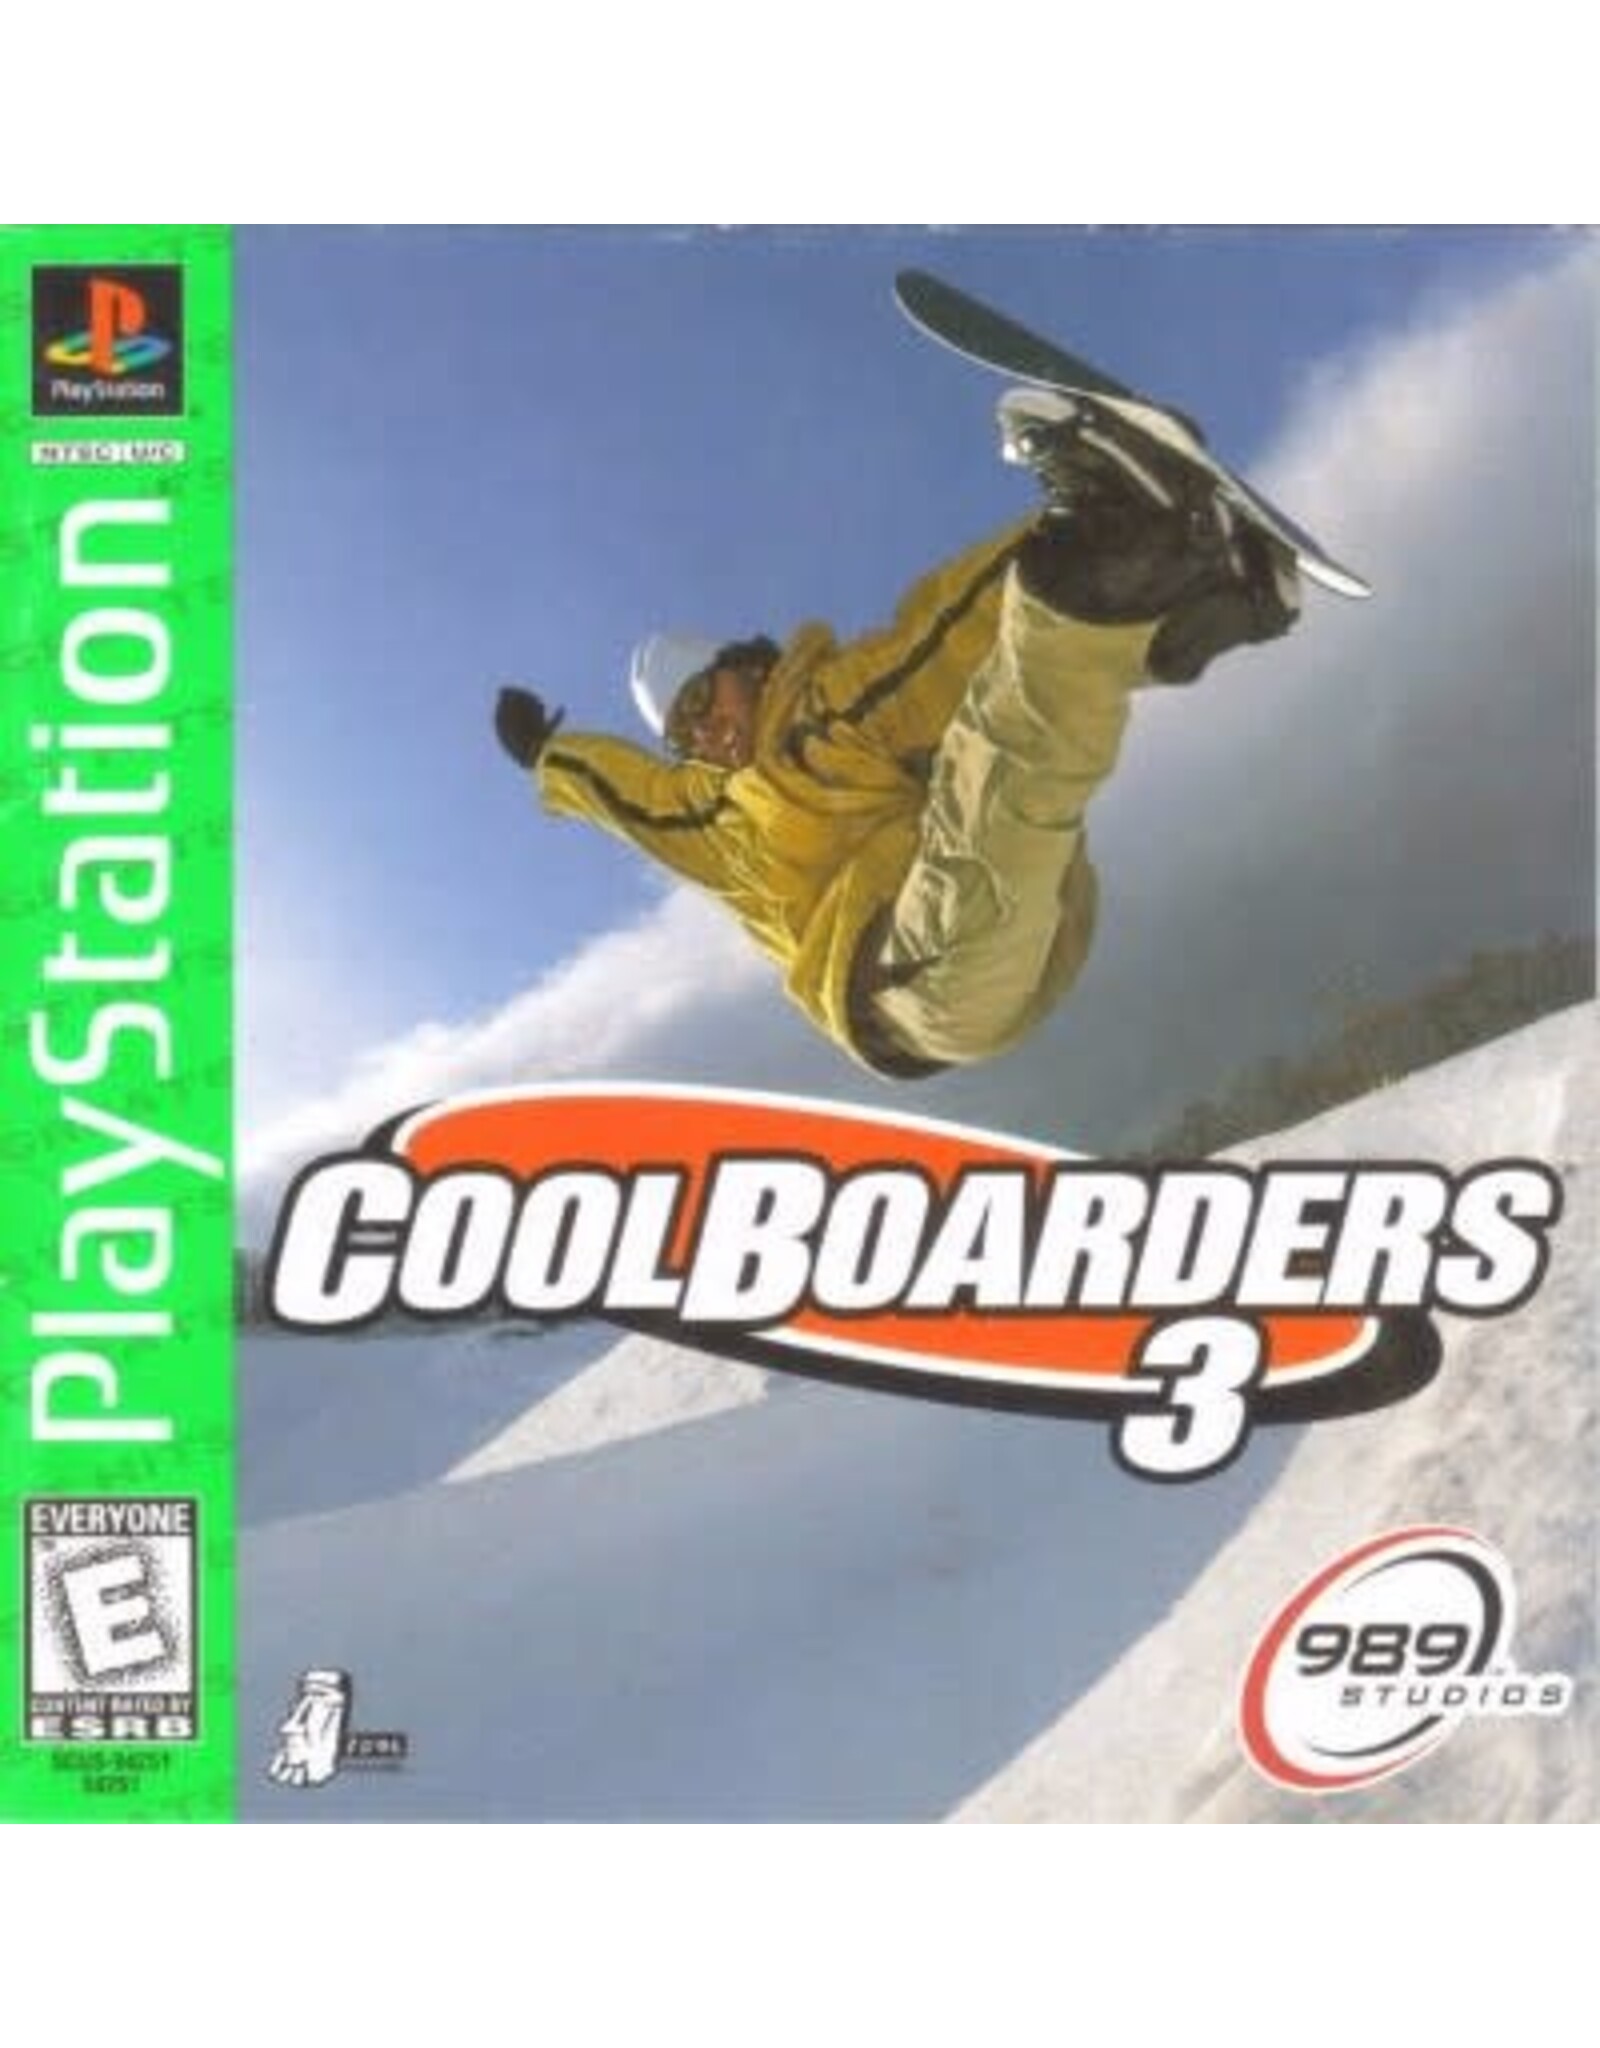 Playstation Cool Boarders 3 (Greatest Hits, CiB, Damaged Manual)